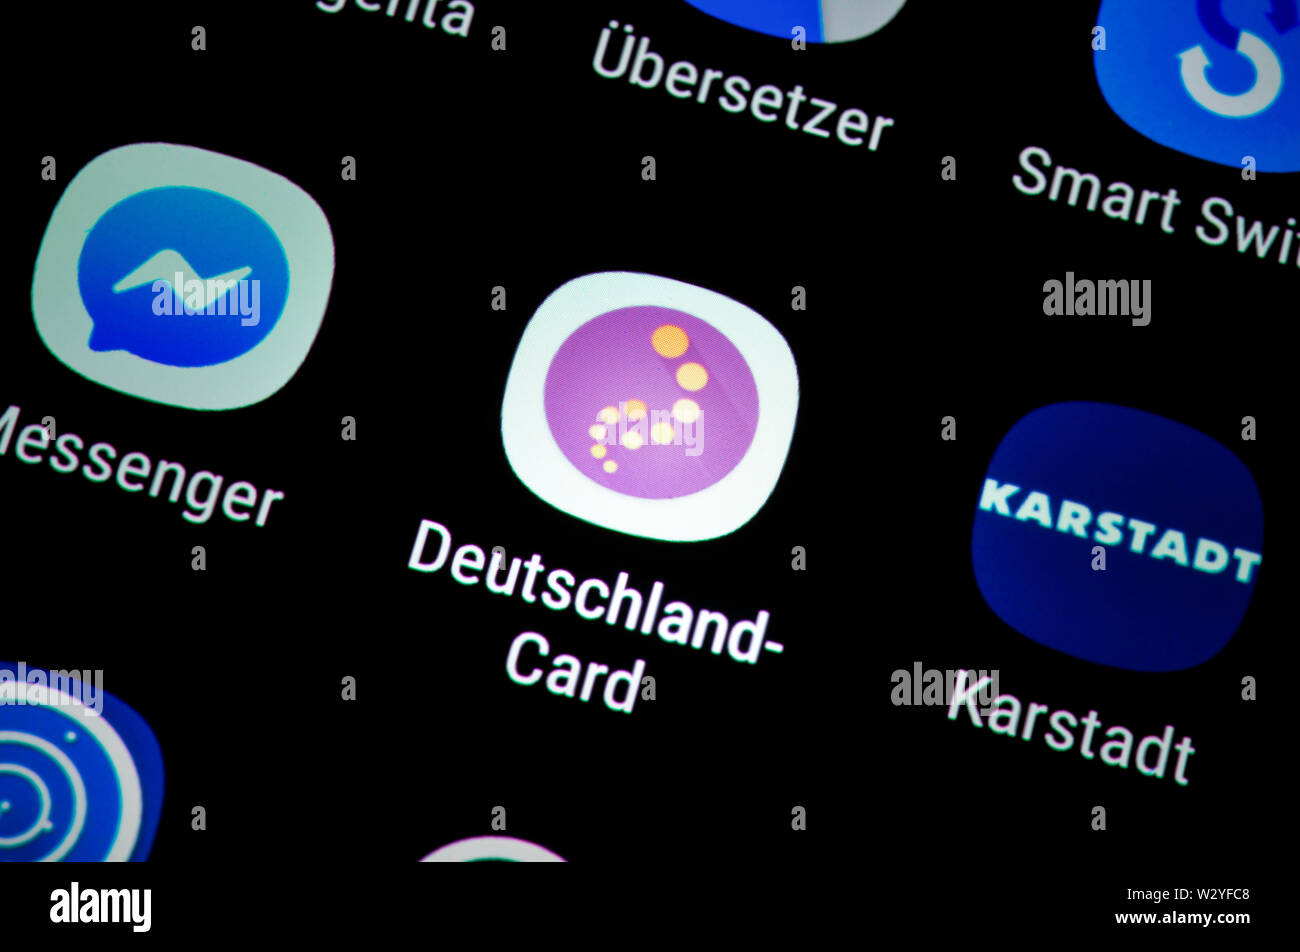 Smartphone, mostrar, App Deutschland-Card Foto de stock